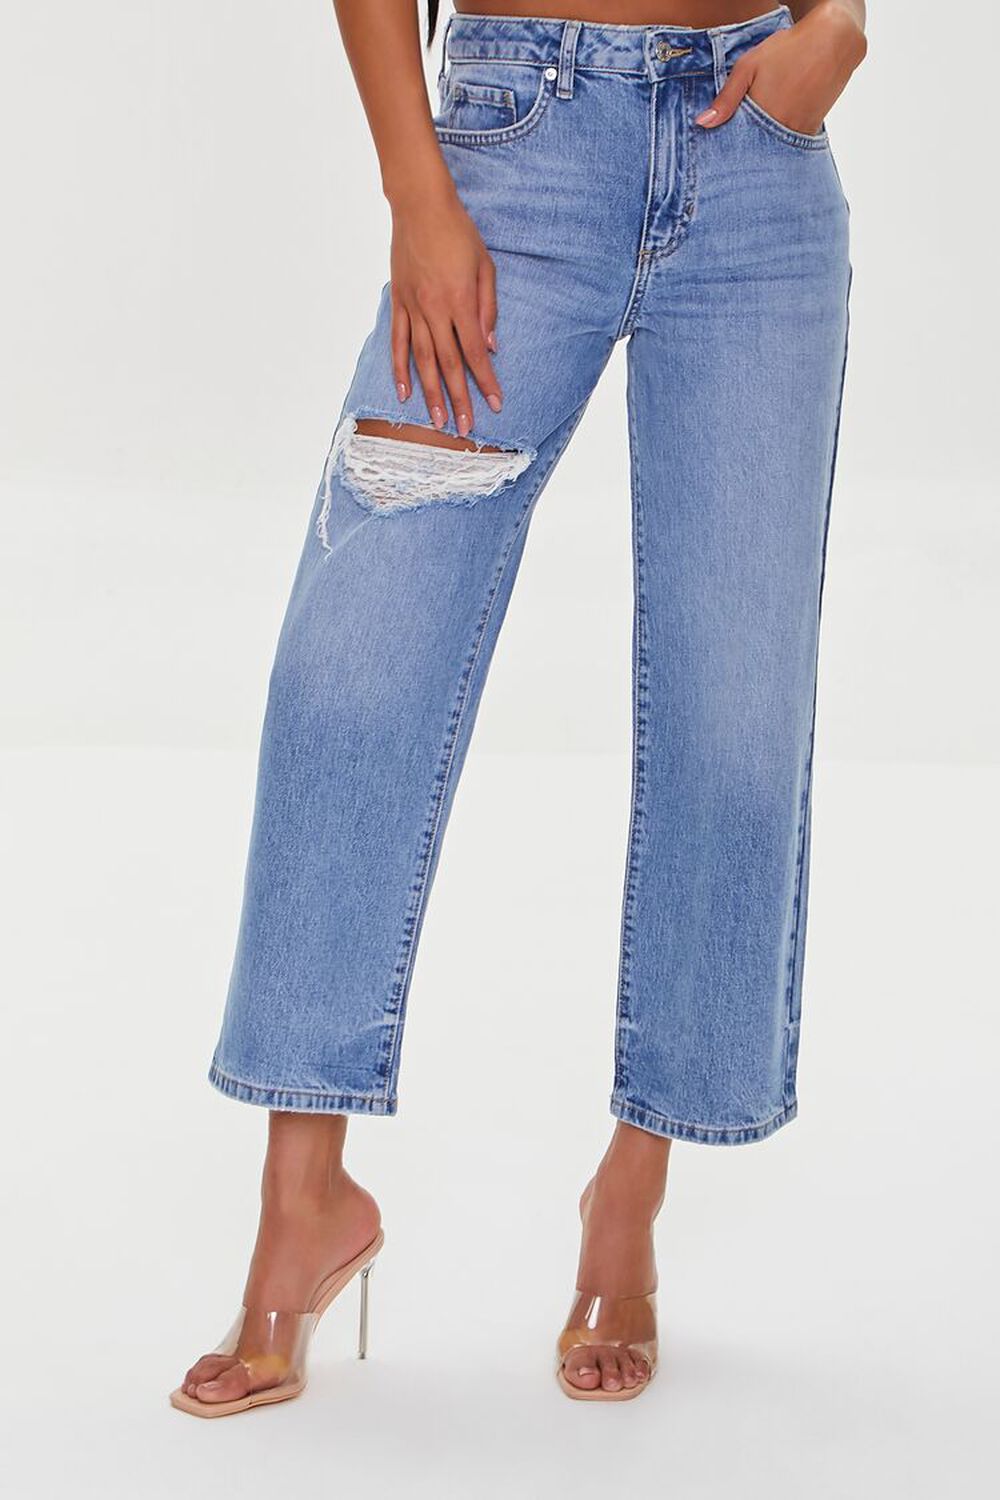 MEDIUM DENIM Recycled Cotton Distressed Straight-Leg Jeans, image 2